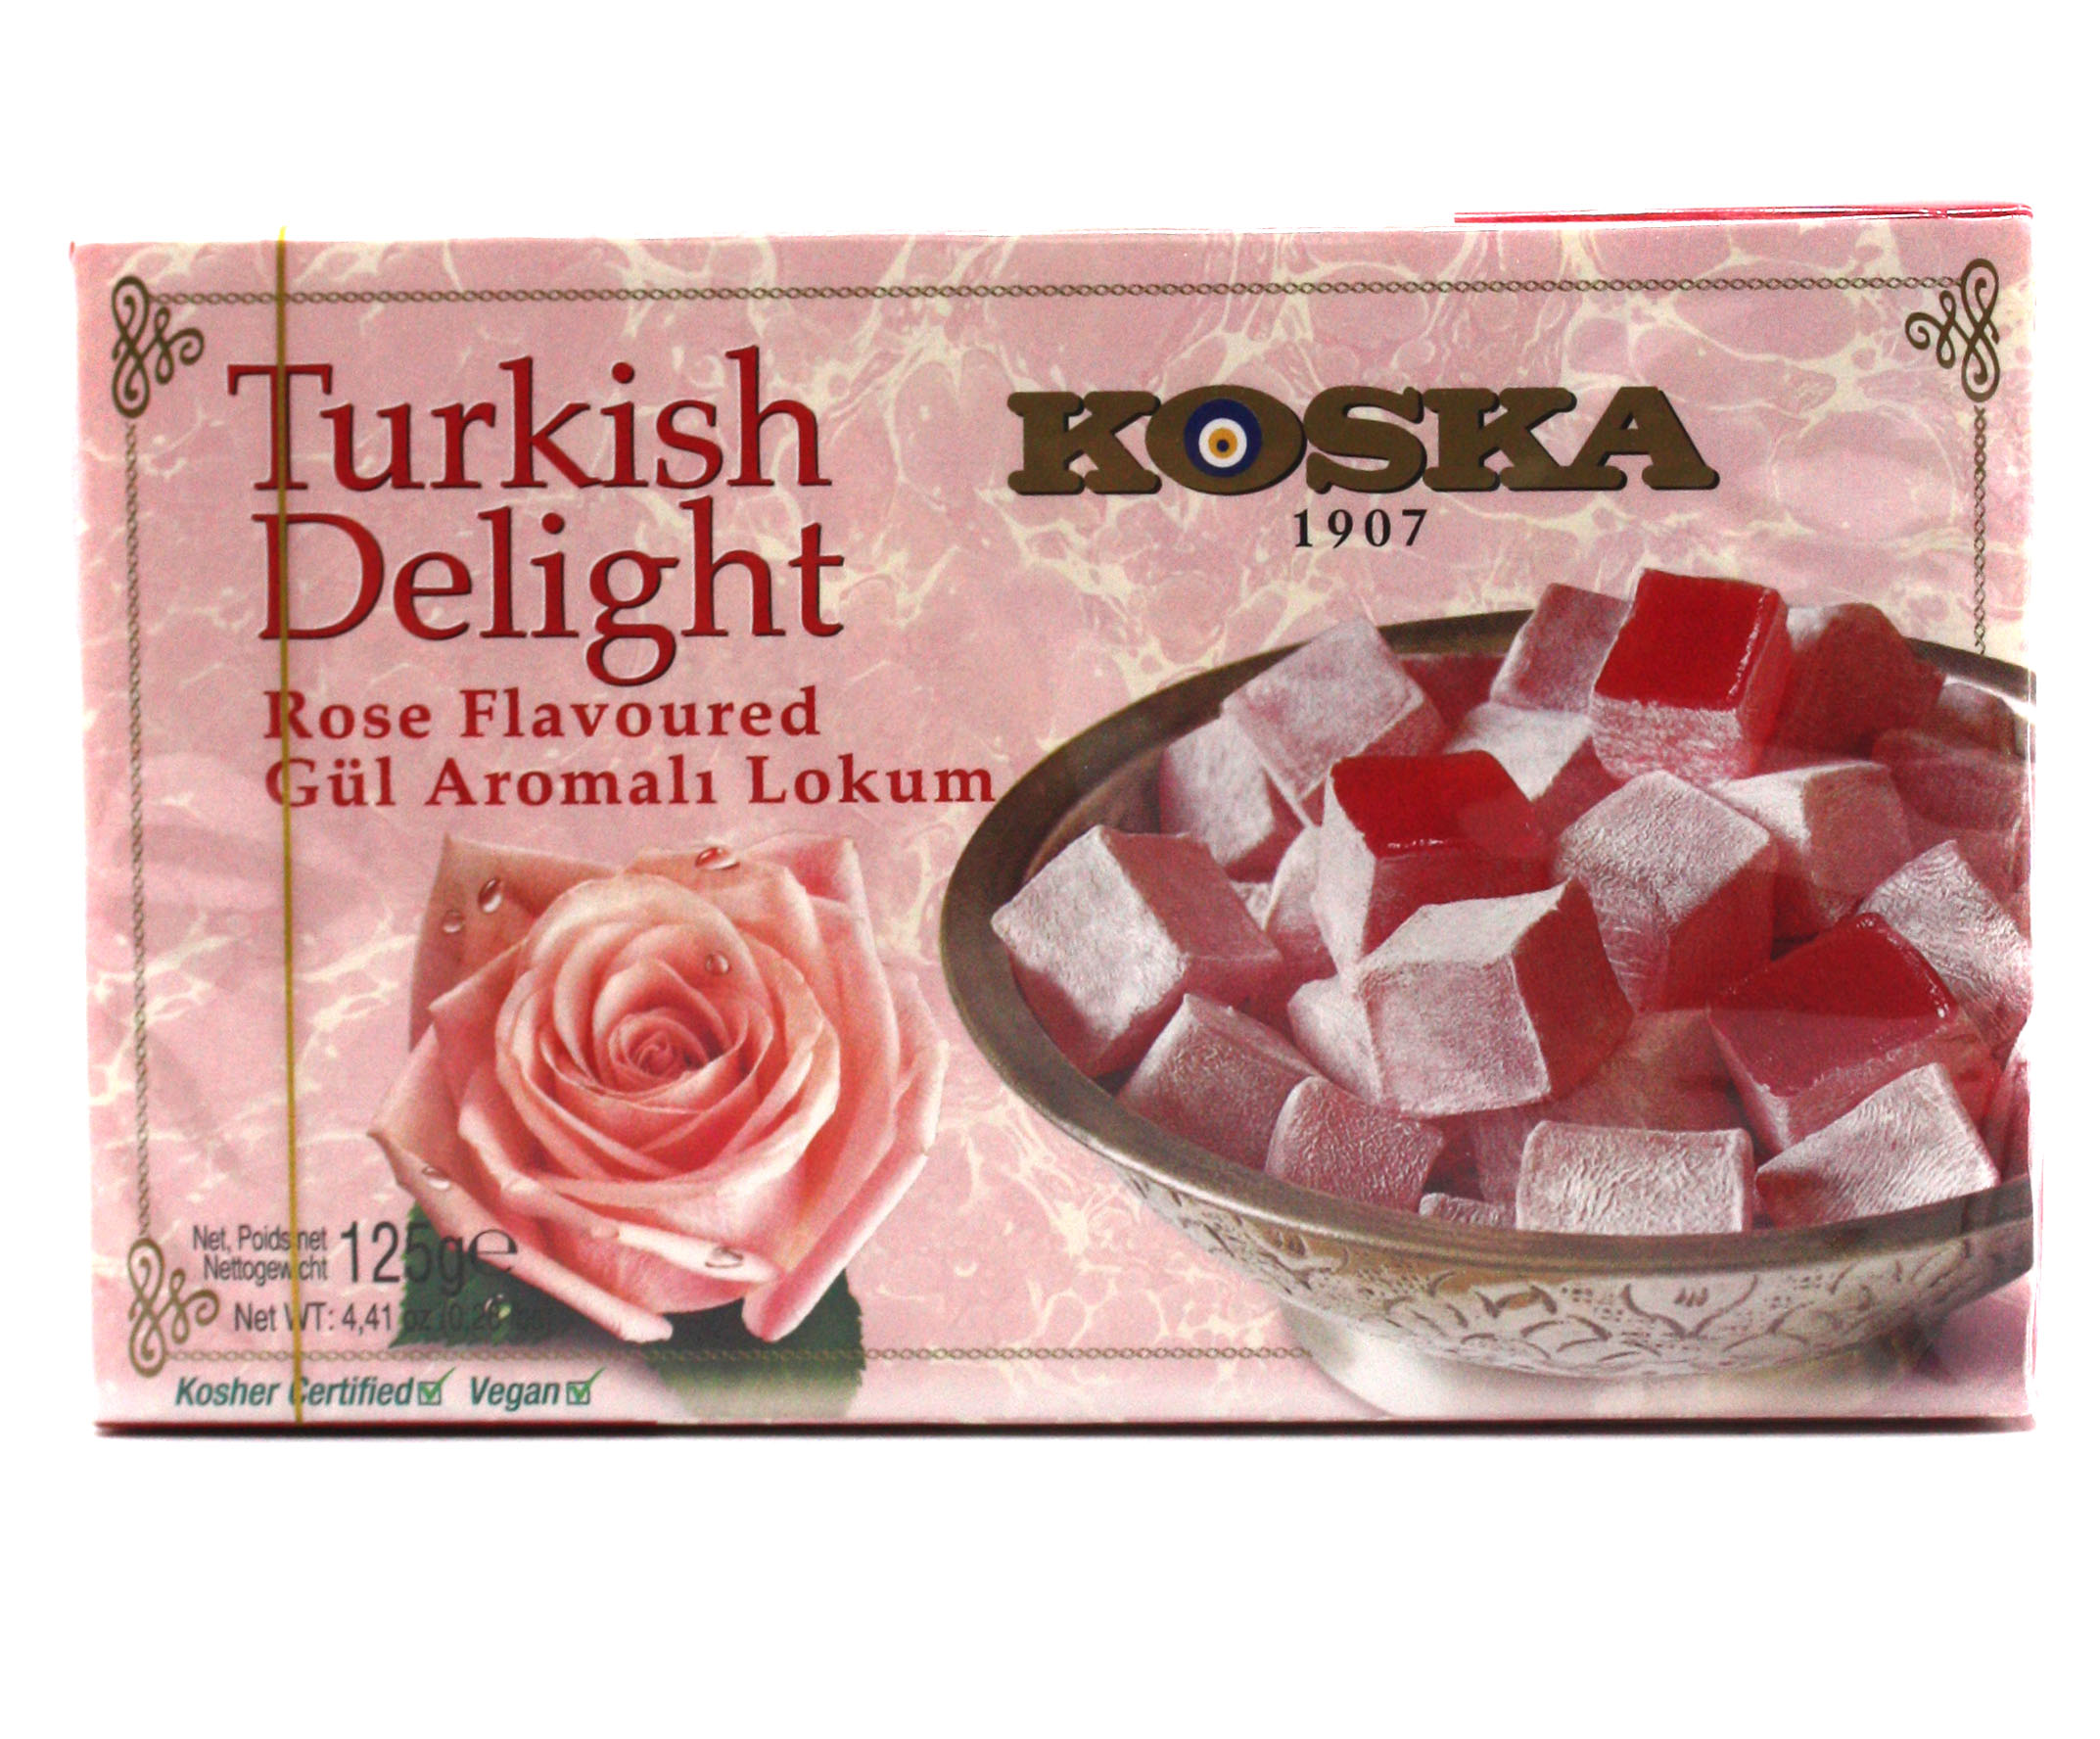 Turkish Delight ROSE Flavoured, KOSKA (Рахат Лукум С АРОМАТОМ РОЗЫ), 125 г.